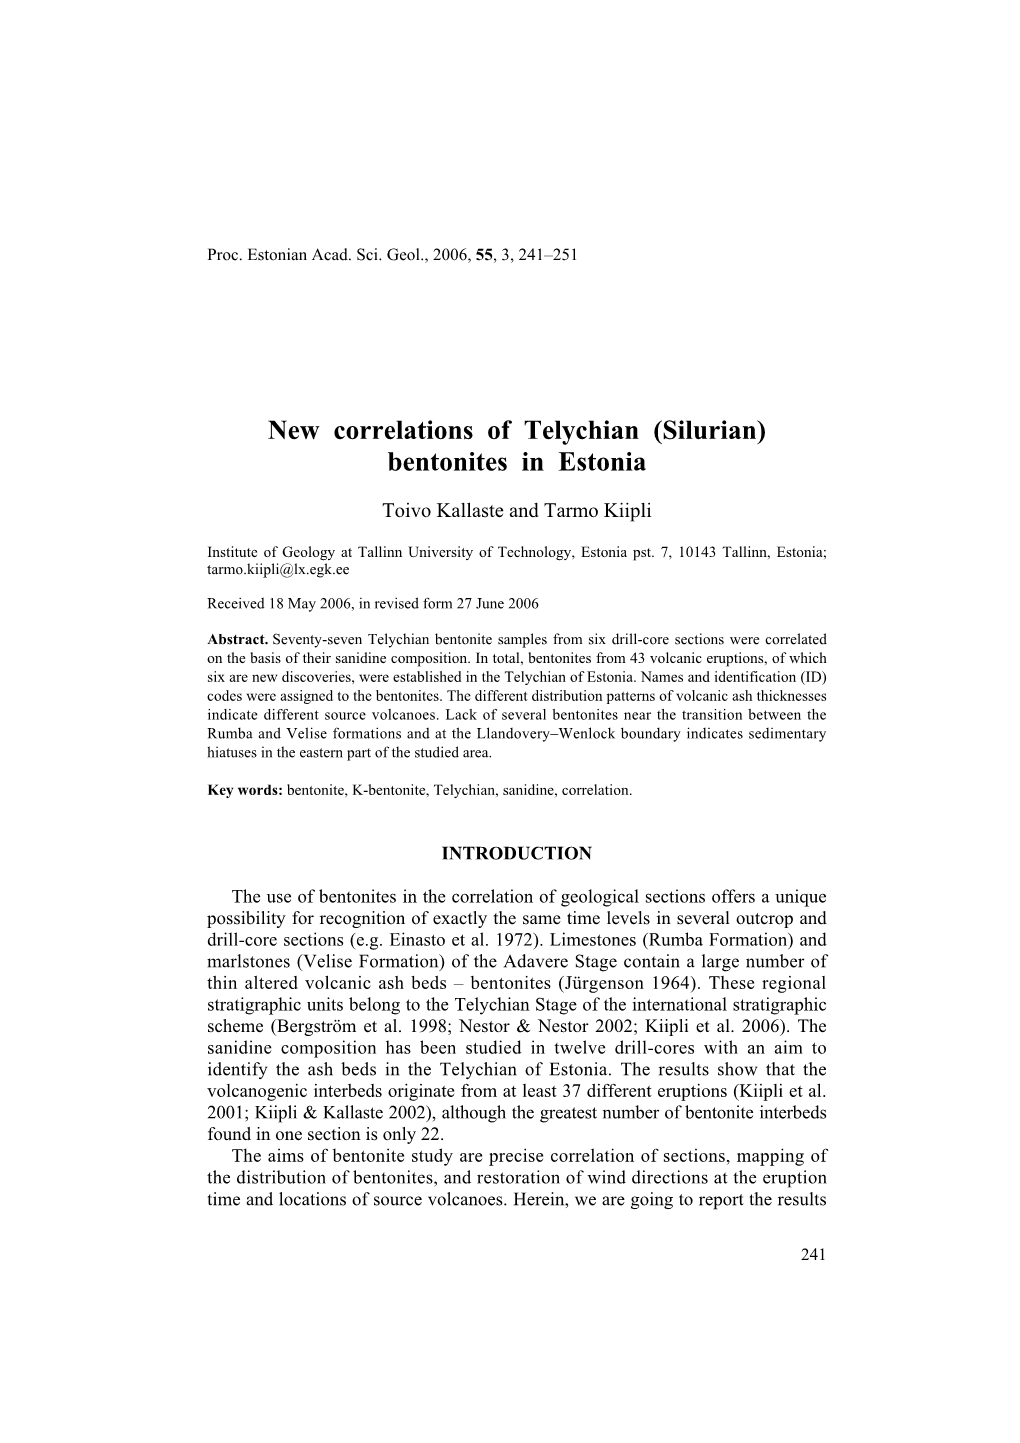 New Correlations of Telychian (Silurian) Bentonites in Estonia